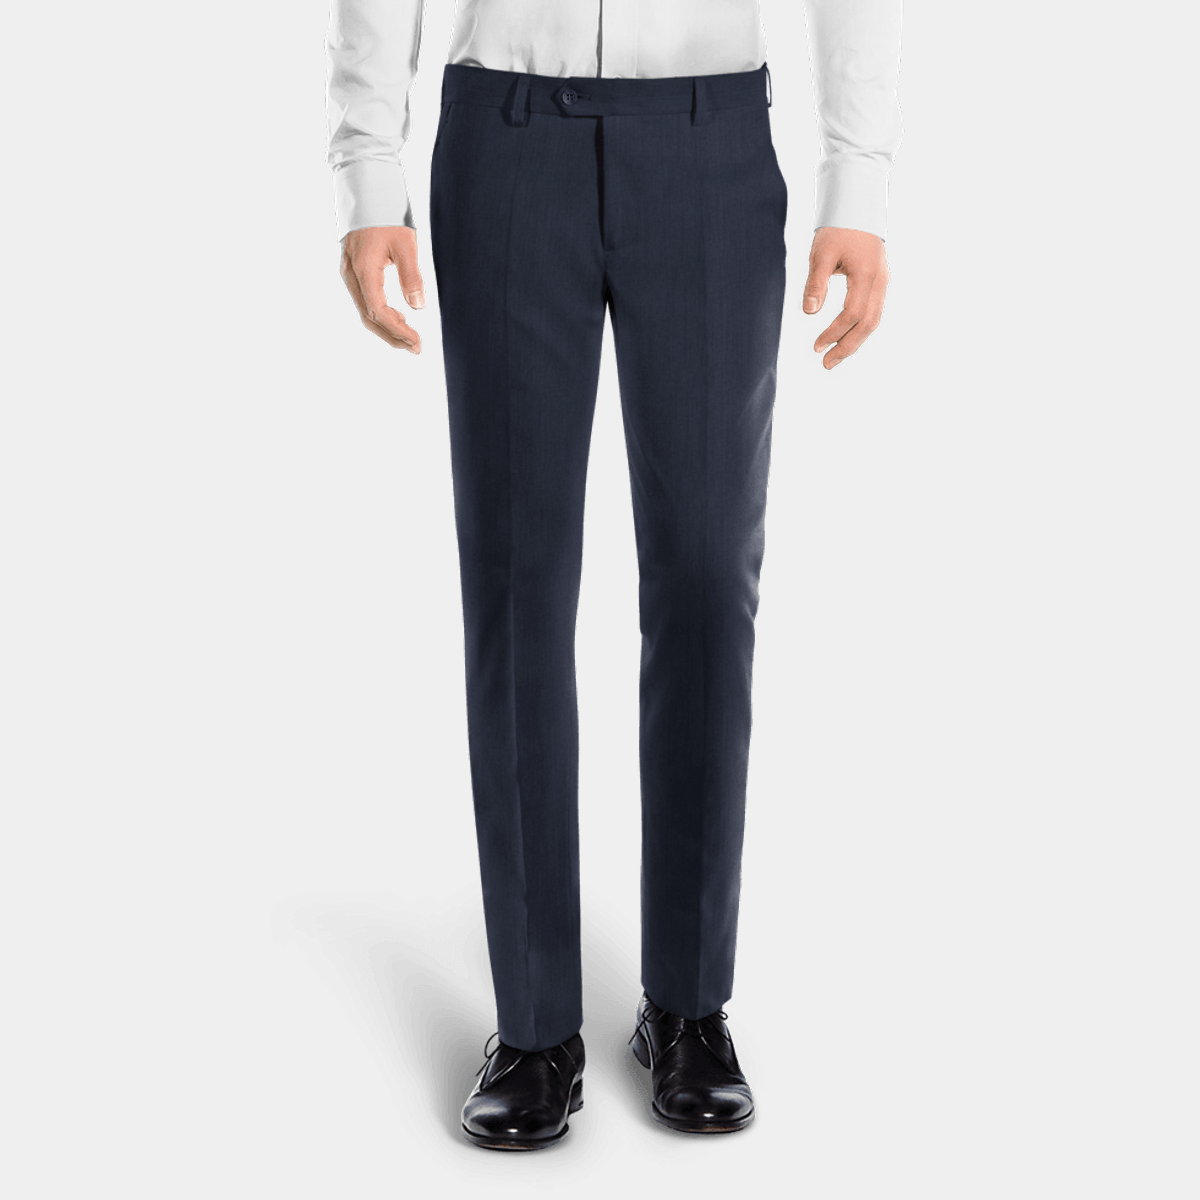 Blue slim fit linen Pants $99 | Hockerty